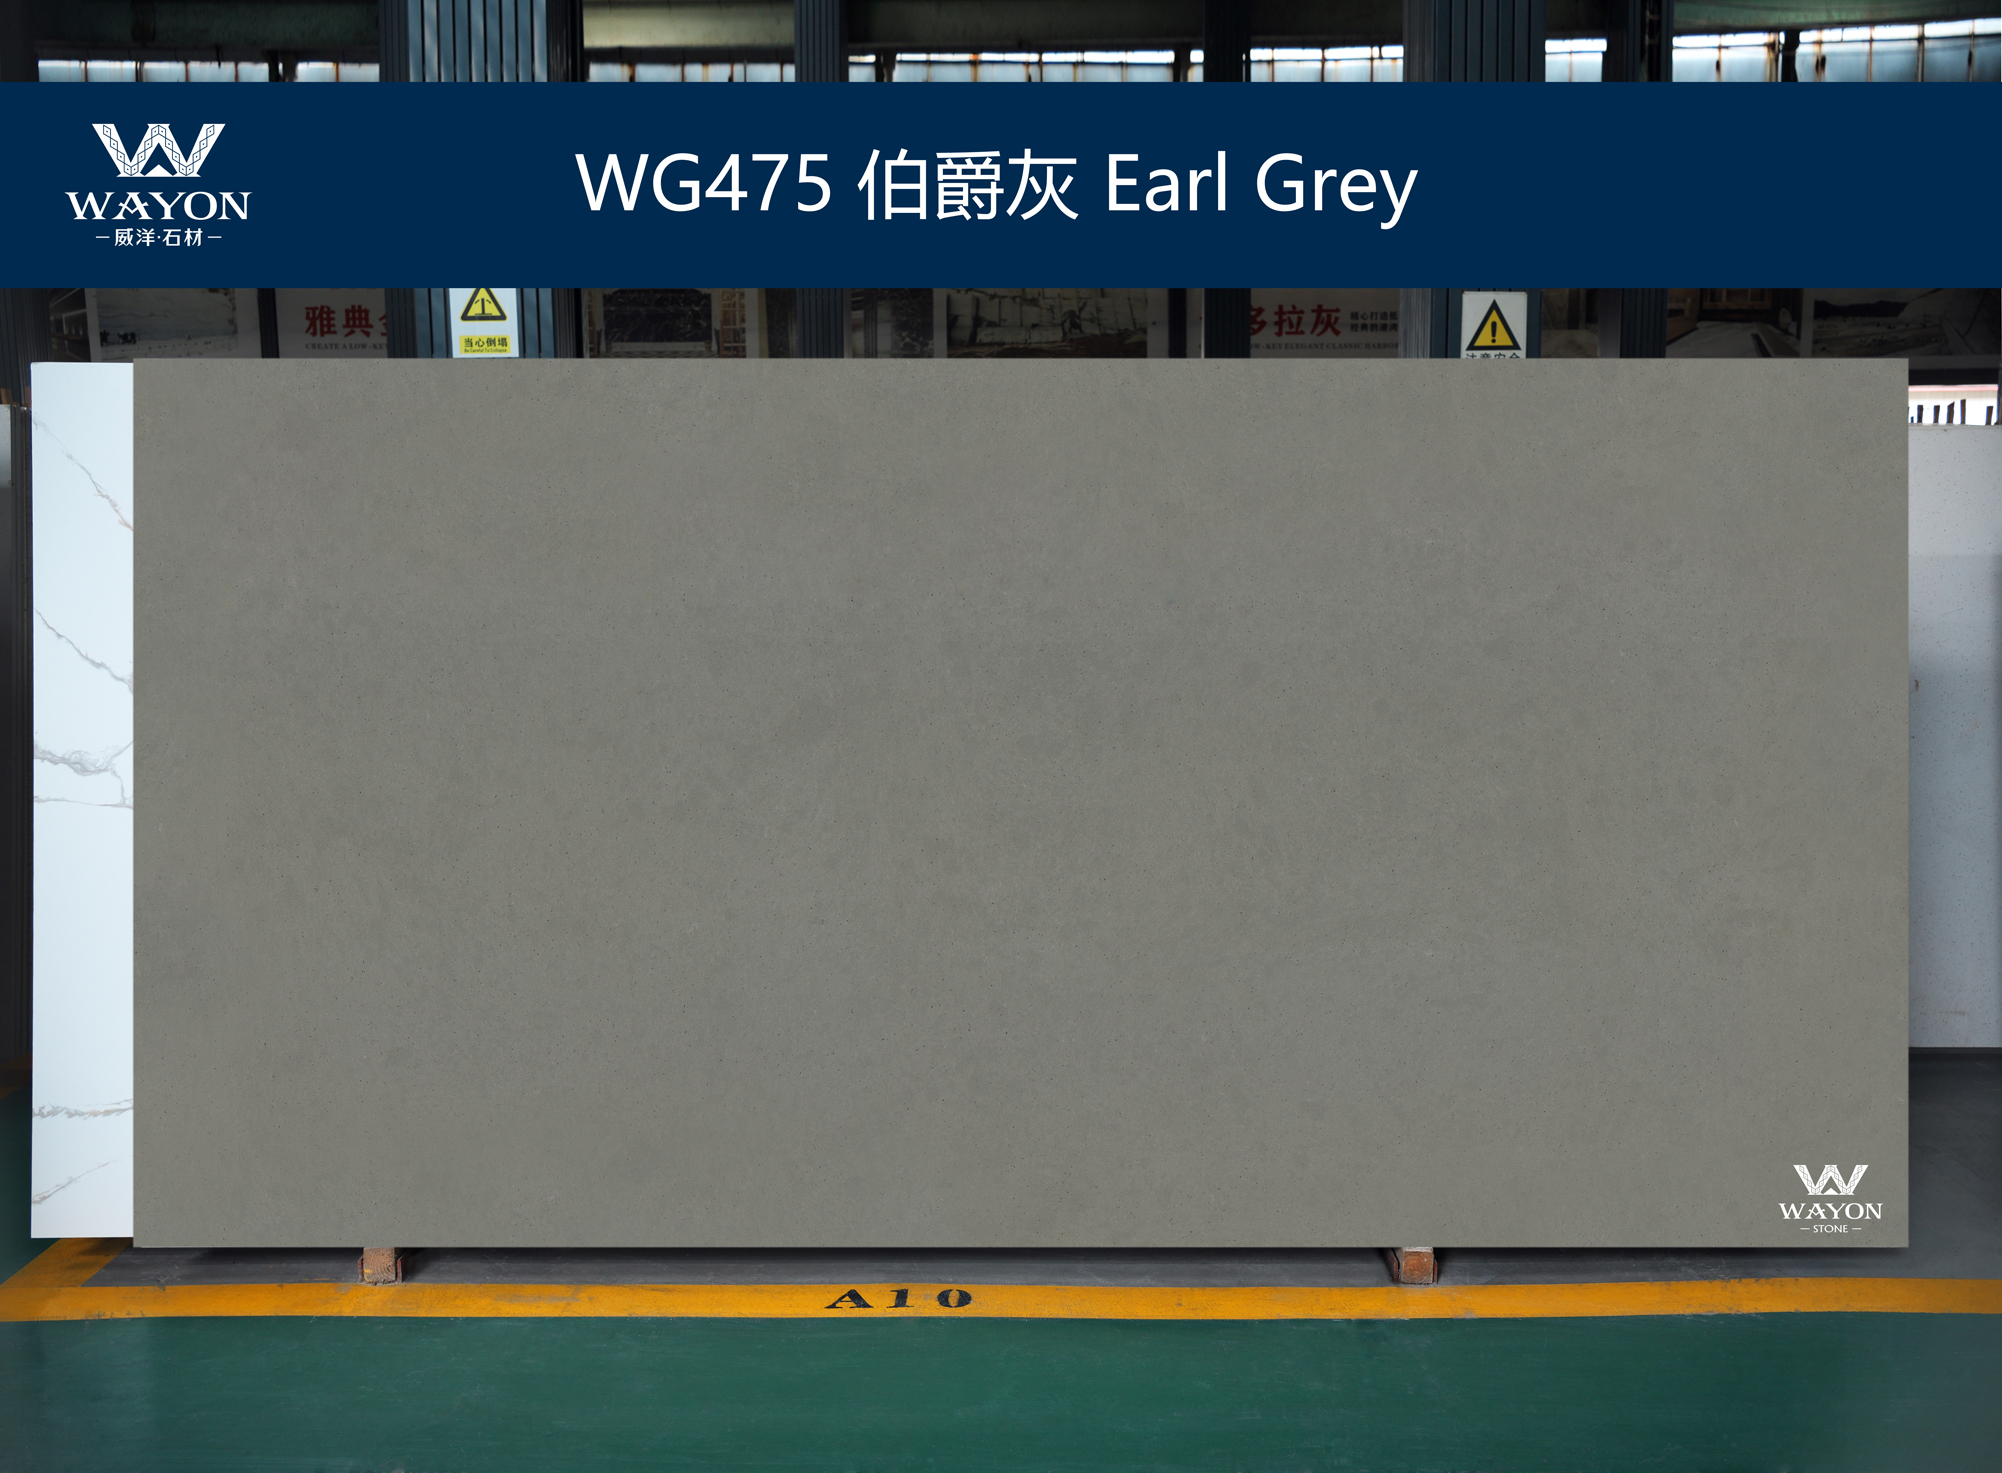 WG475 Earl Grey